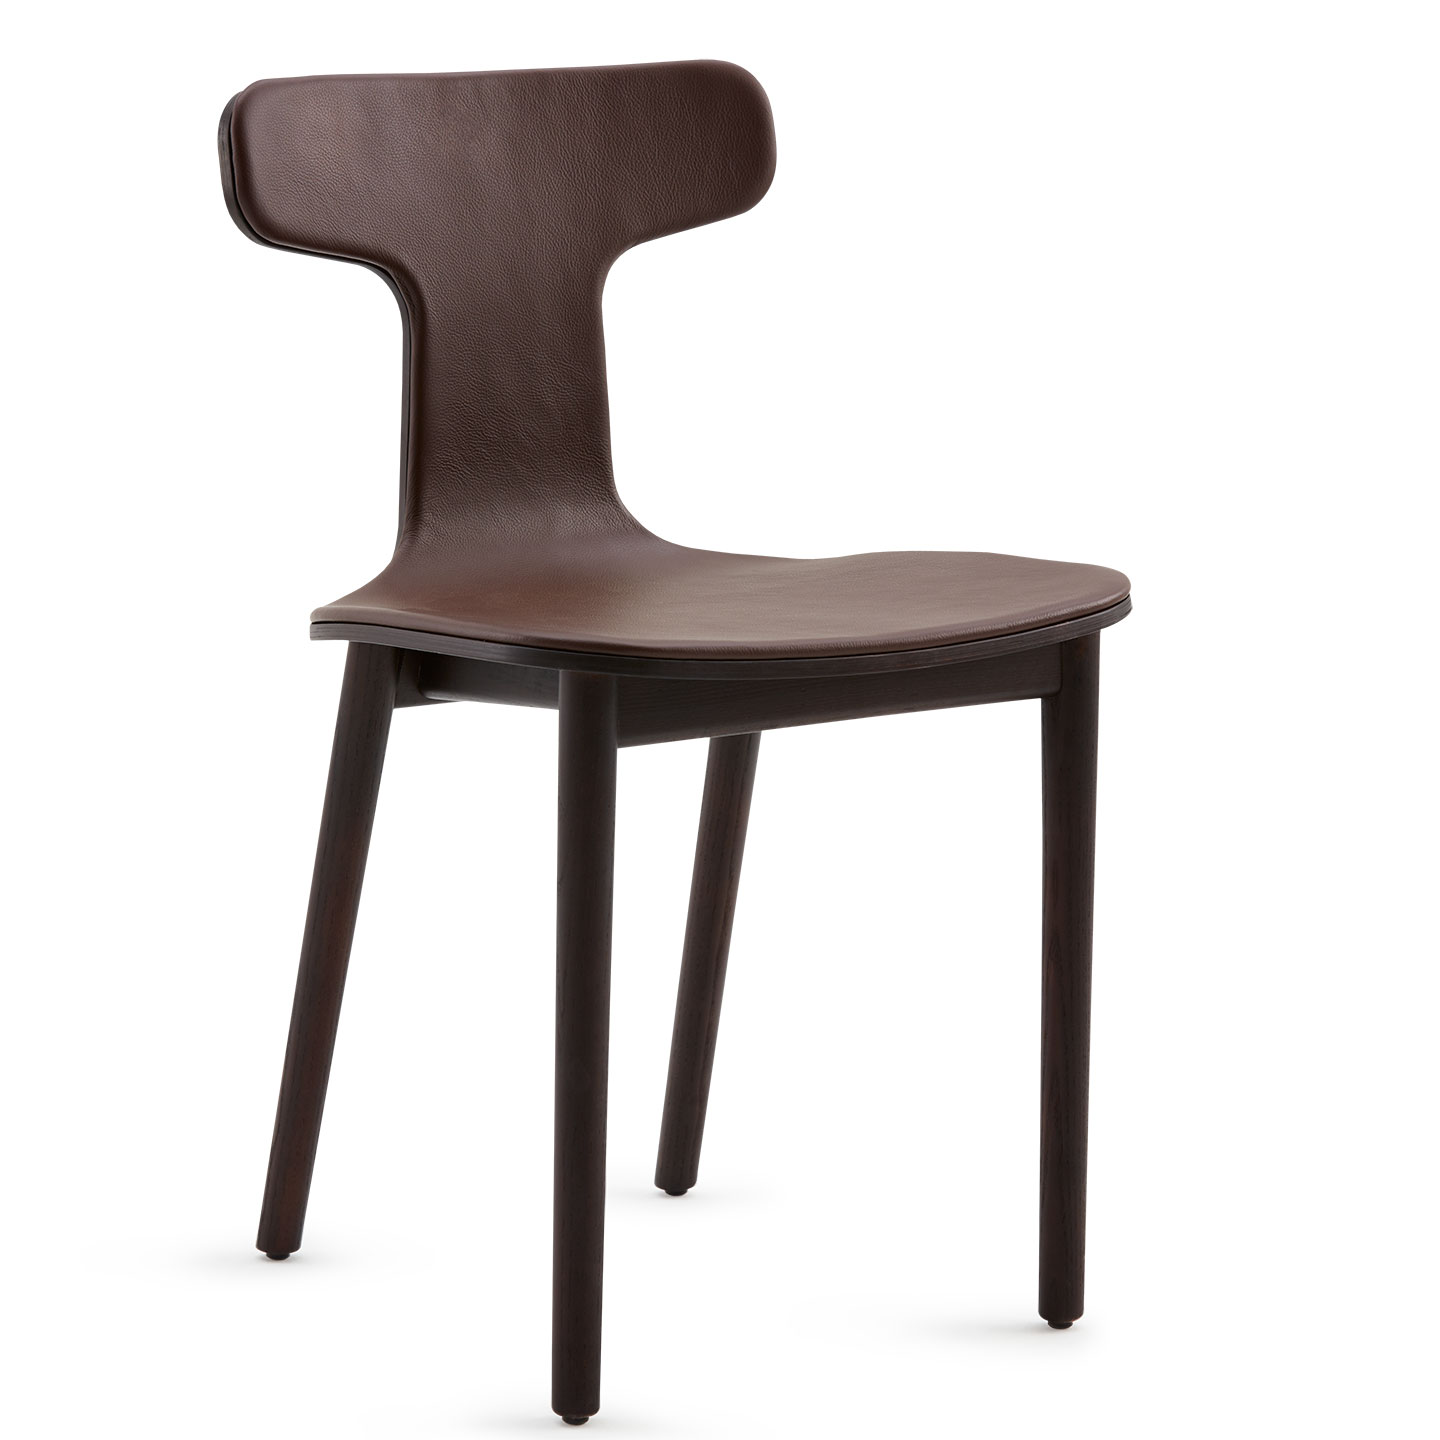 Haworth Bac One chair in dark brown wood